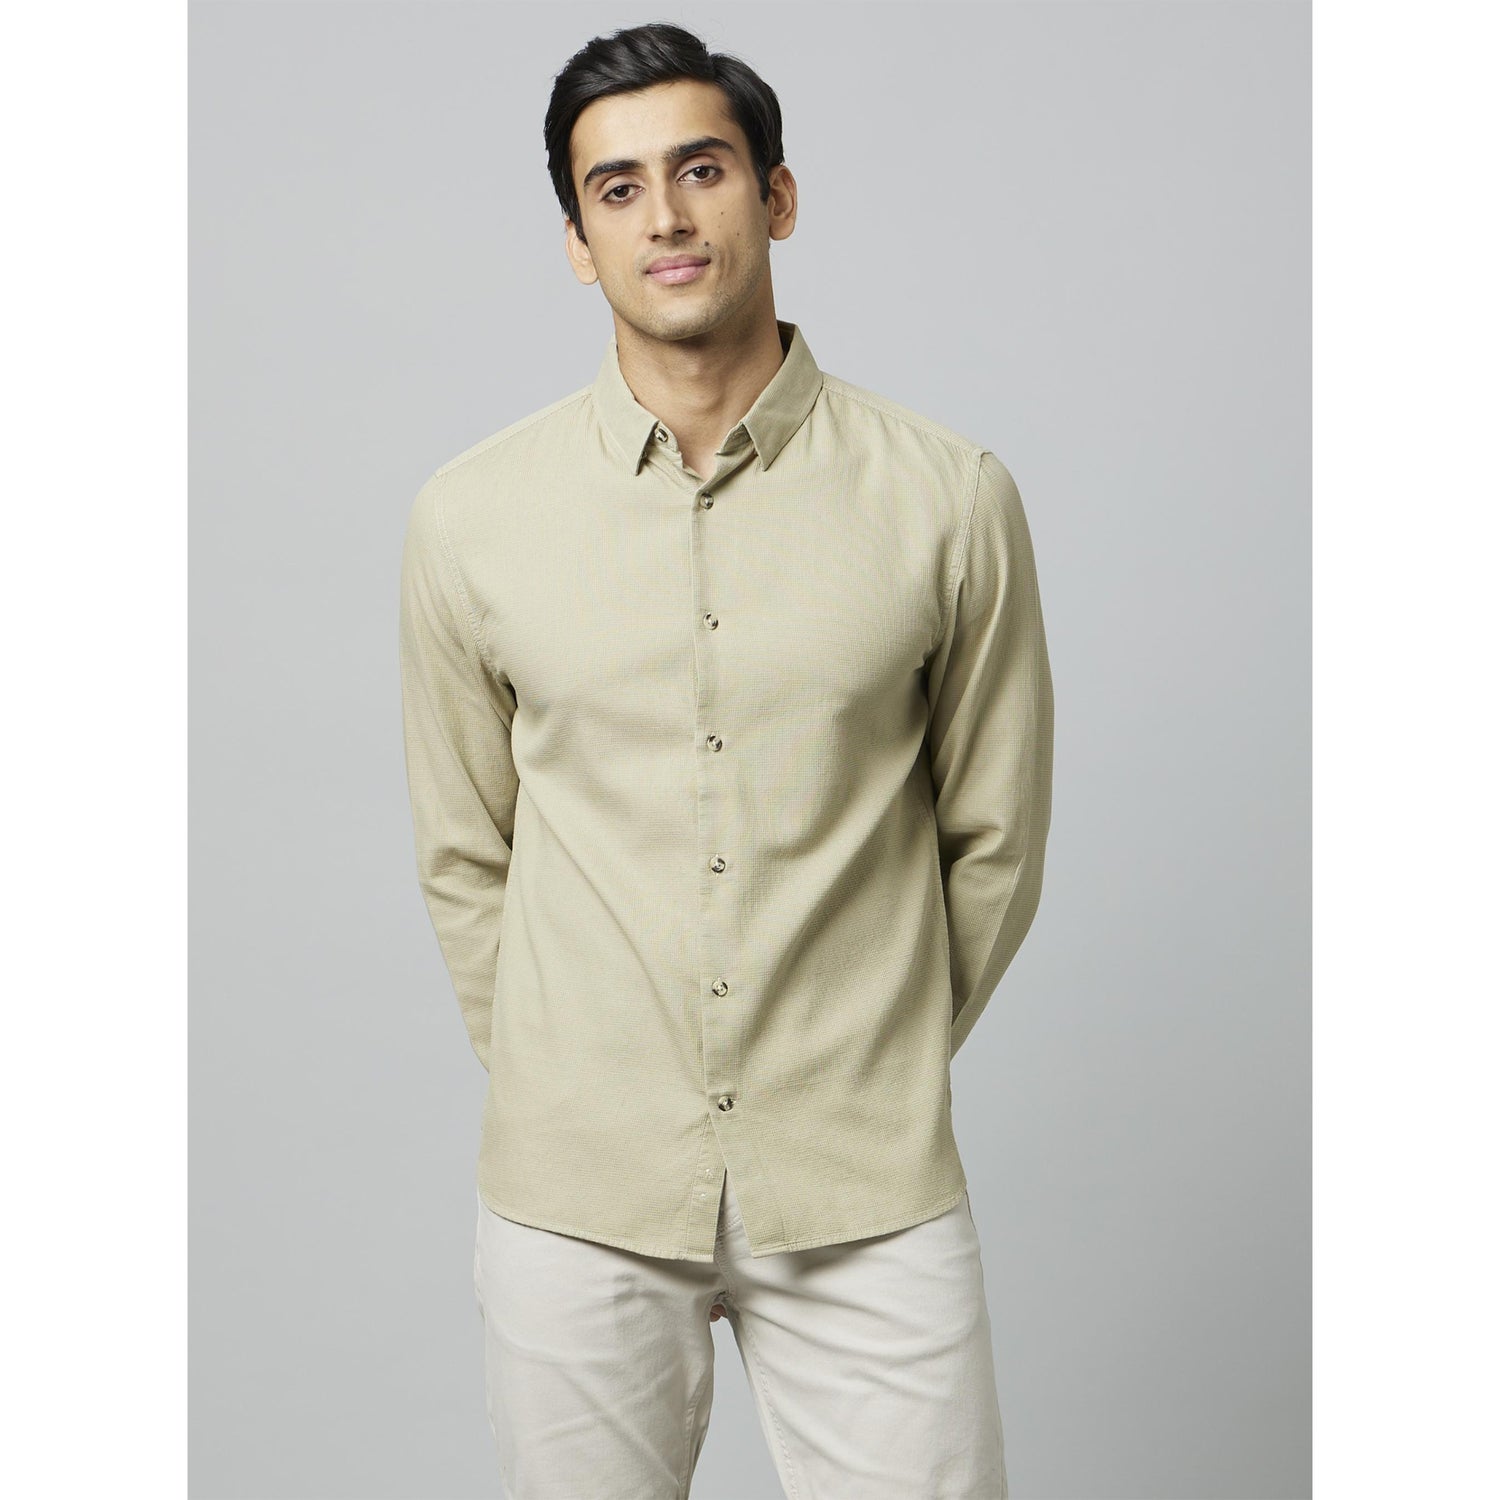 Green Classic Spread Collar Cotton Casual Shirt (DATEXTURE)